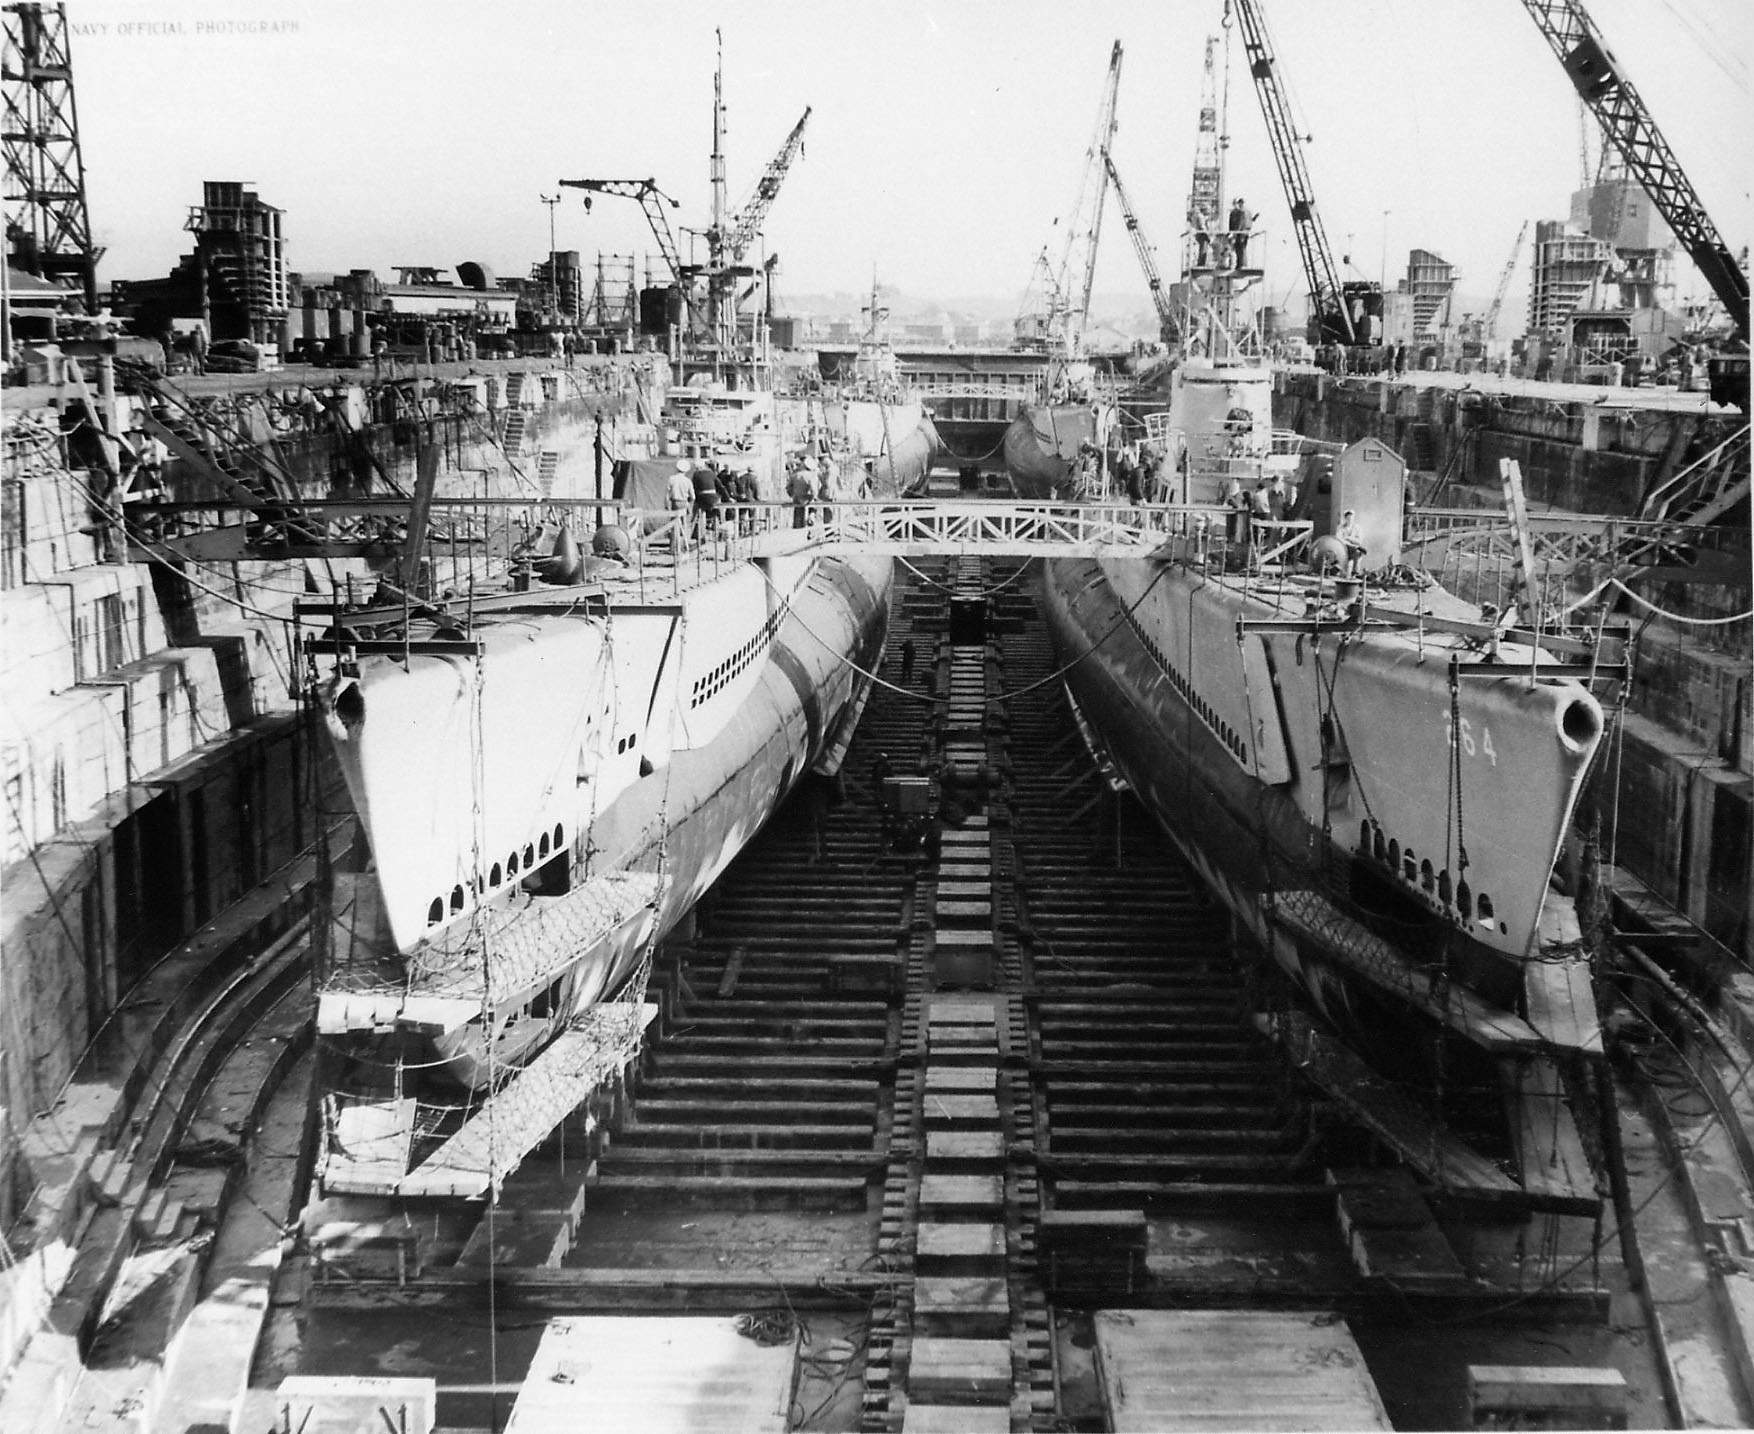 Submarines Sawfish, Pargo, Puffer, and Steelhead at Mare Island Naval Shipyard, California, United States, 14 Feb 1947